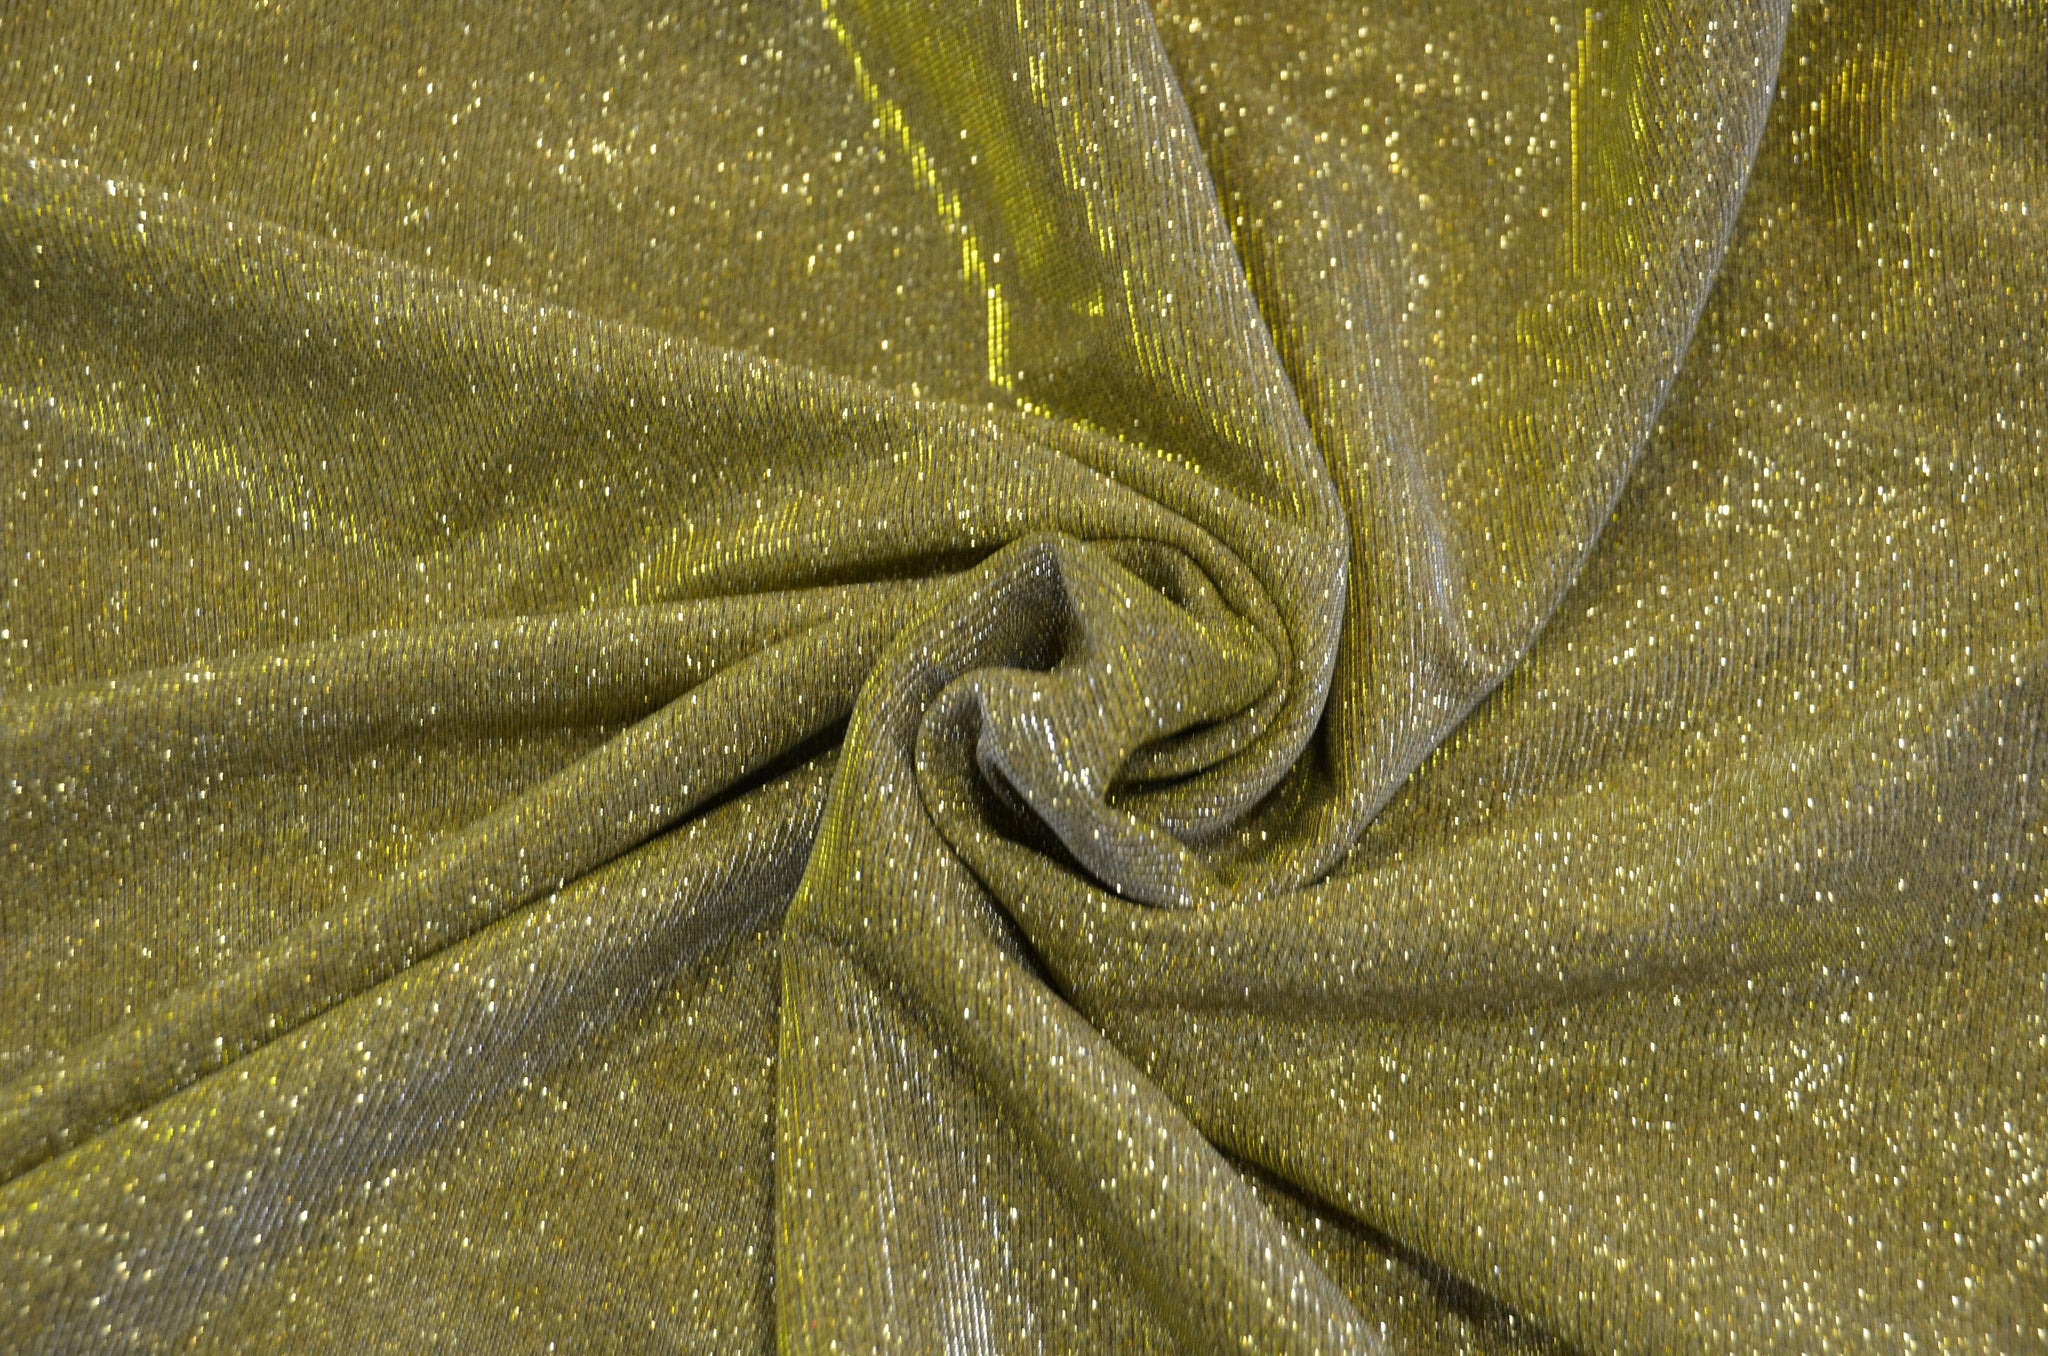 Stretch Velvet Knit Dark Gold Fabric By The Yard